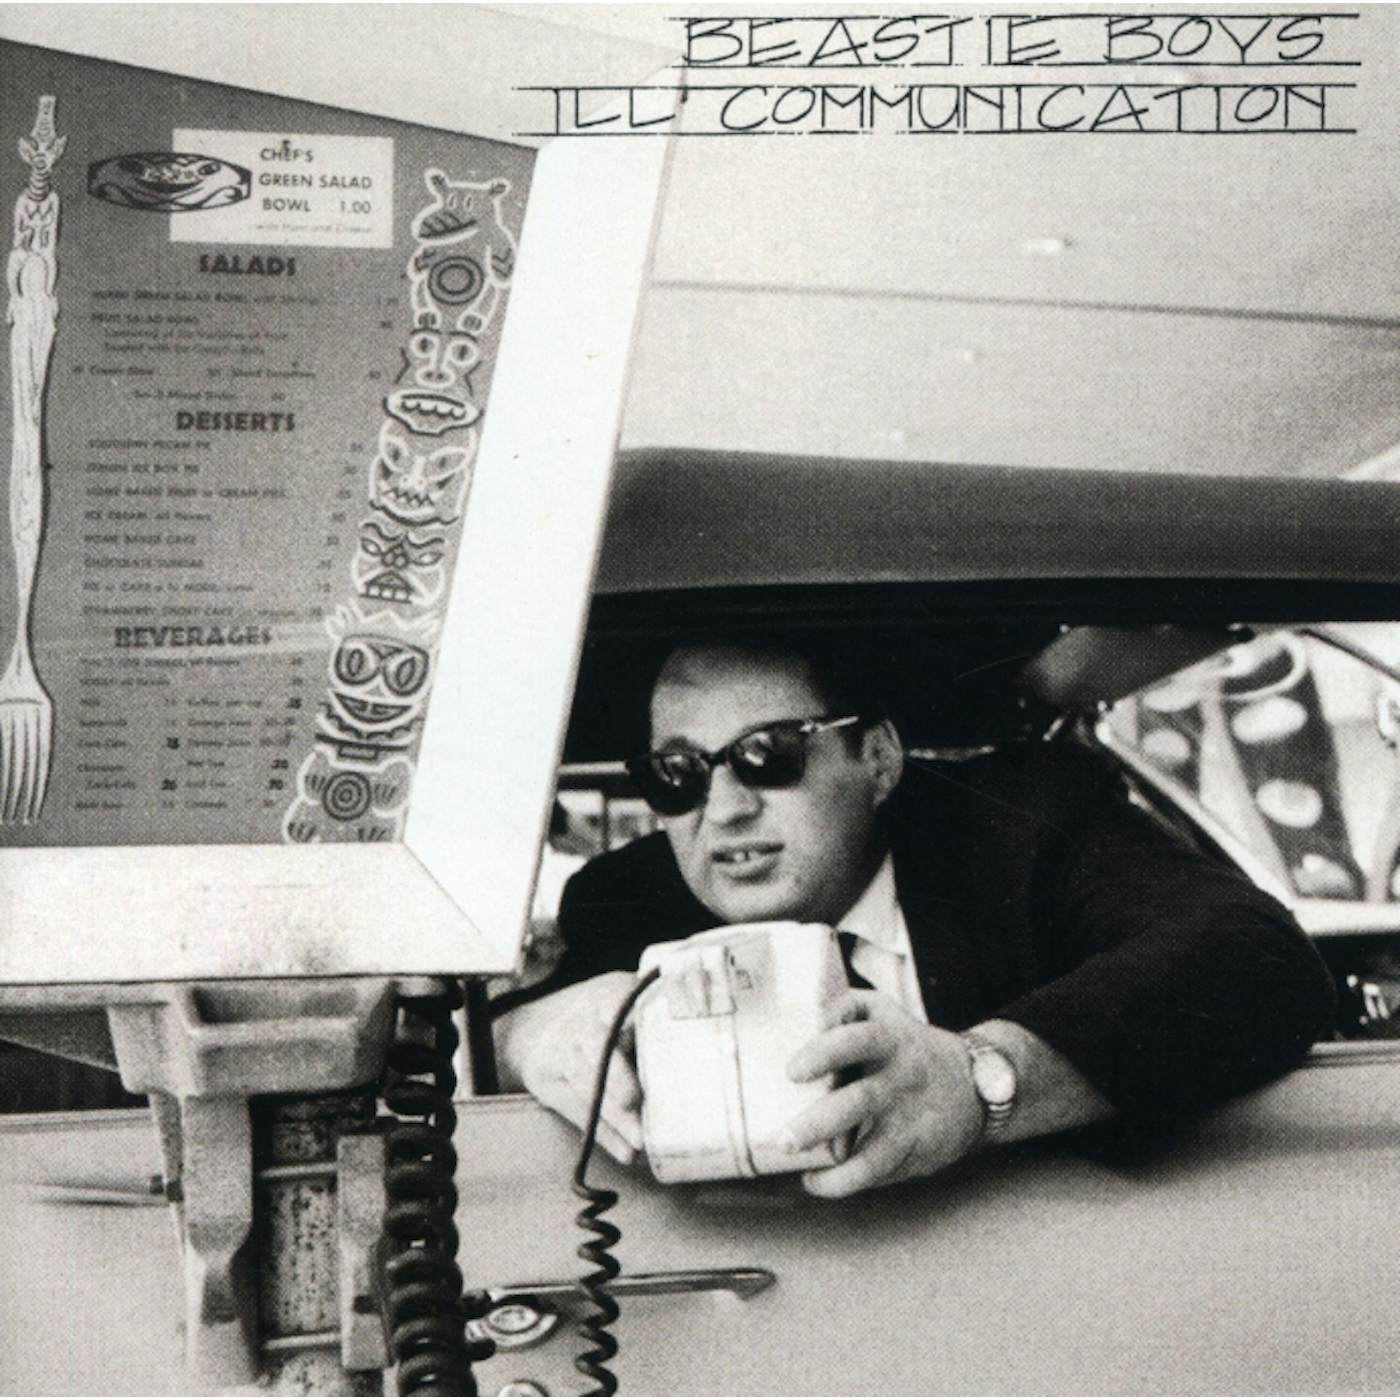 Beastie Boys ILL COMMUNICATION CD